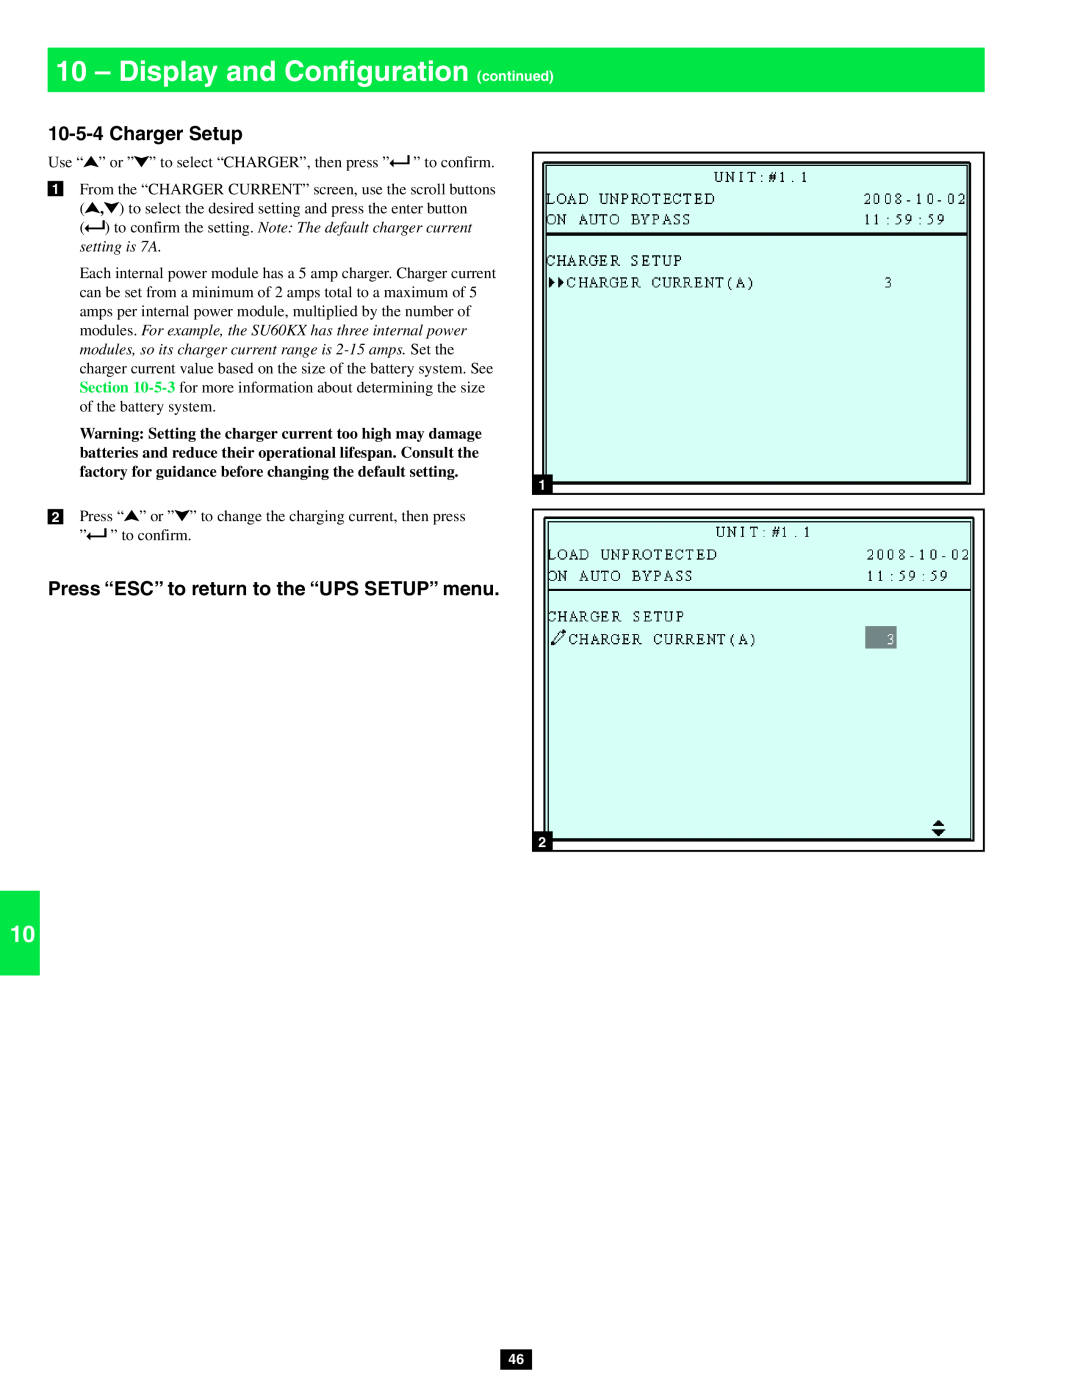 Tripp Lite SU20KX Charger Setup, 1 10 - Display and Configuration continued, Press “ESC” to return to the “UPS SETUP” menu 